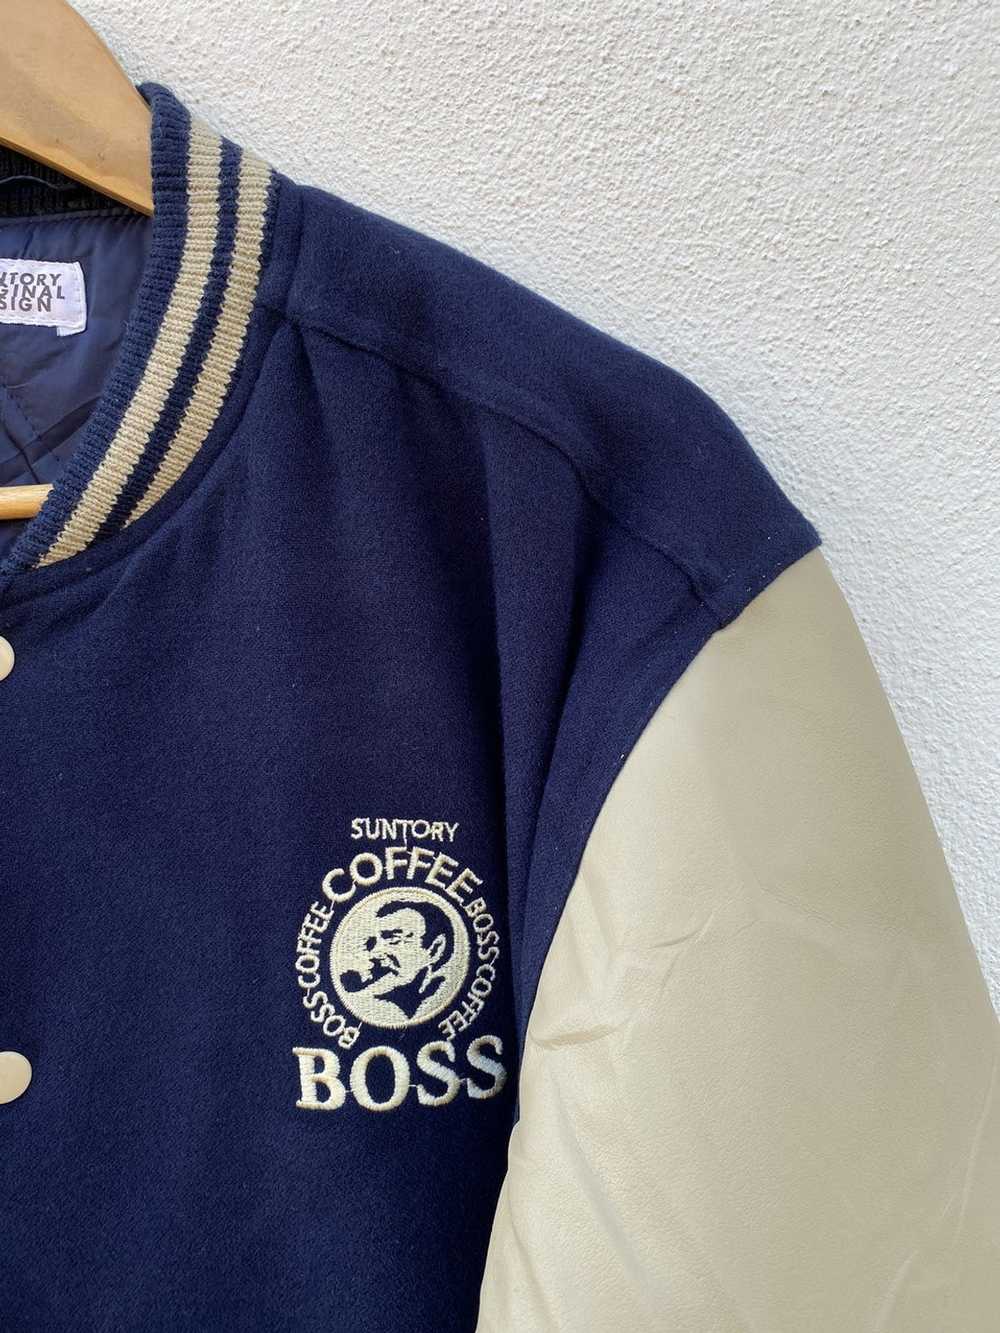 Varsity Jacket Suntory boss coffee varsity jacket - image 9